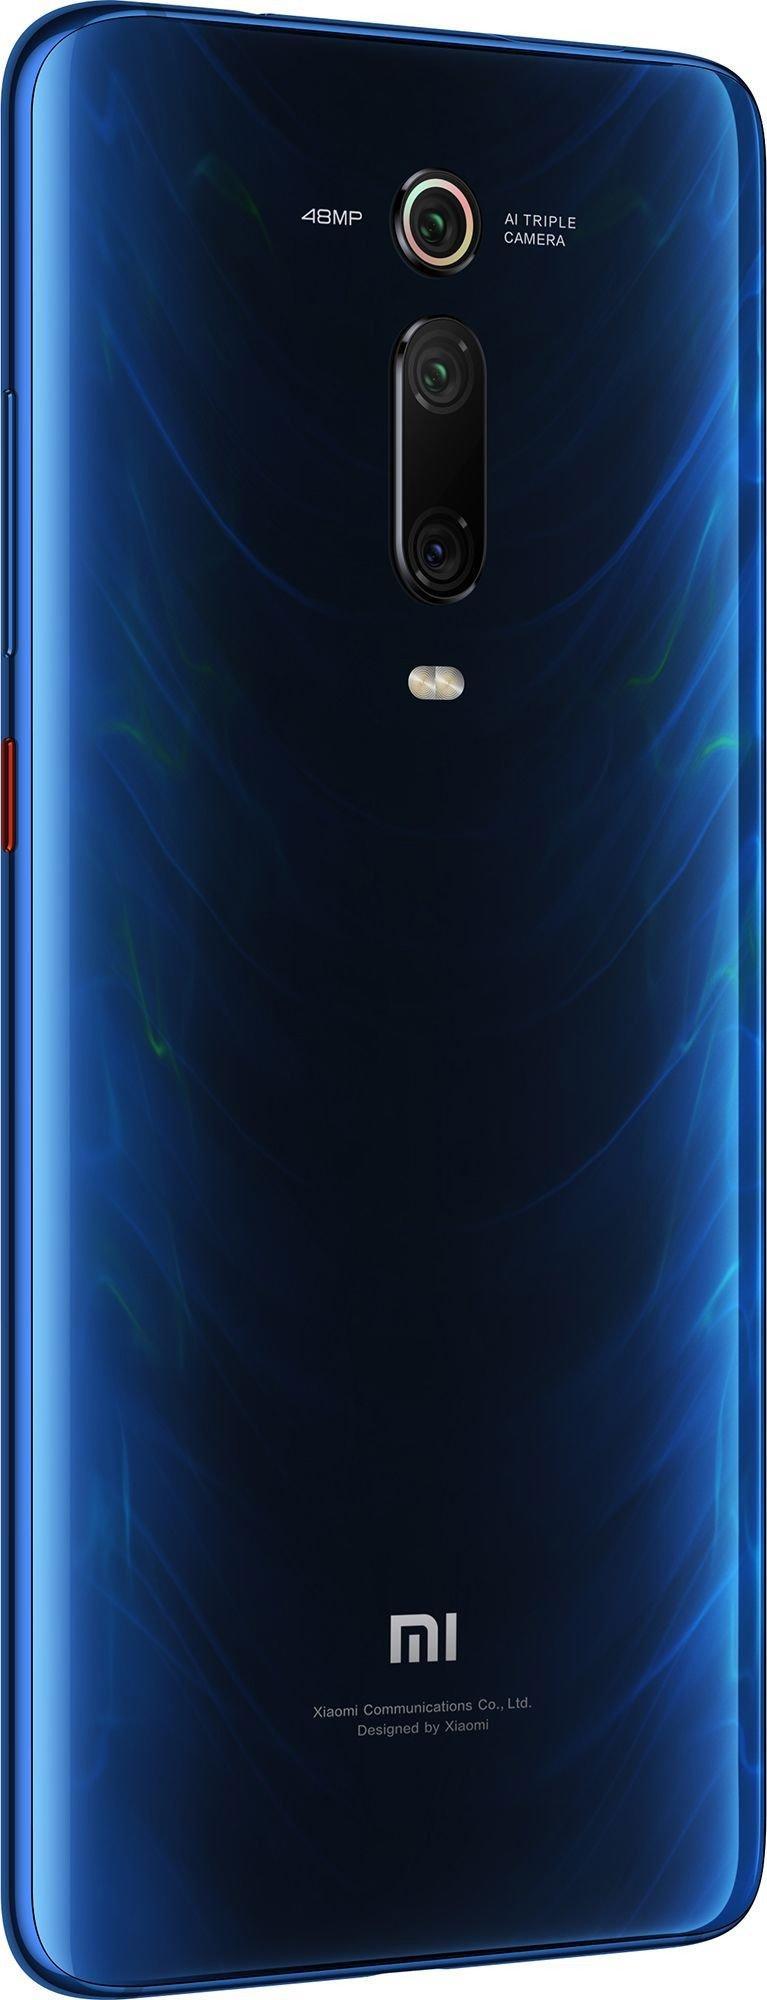 Купить Смартфон Xiaomi Mi 9T (Redmi K20) 6/64Gb Glacier Blue